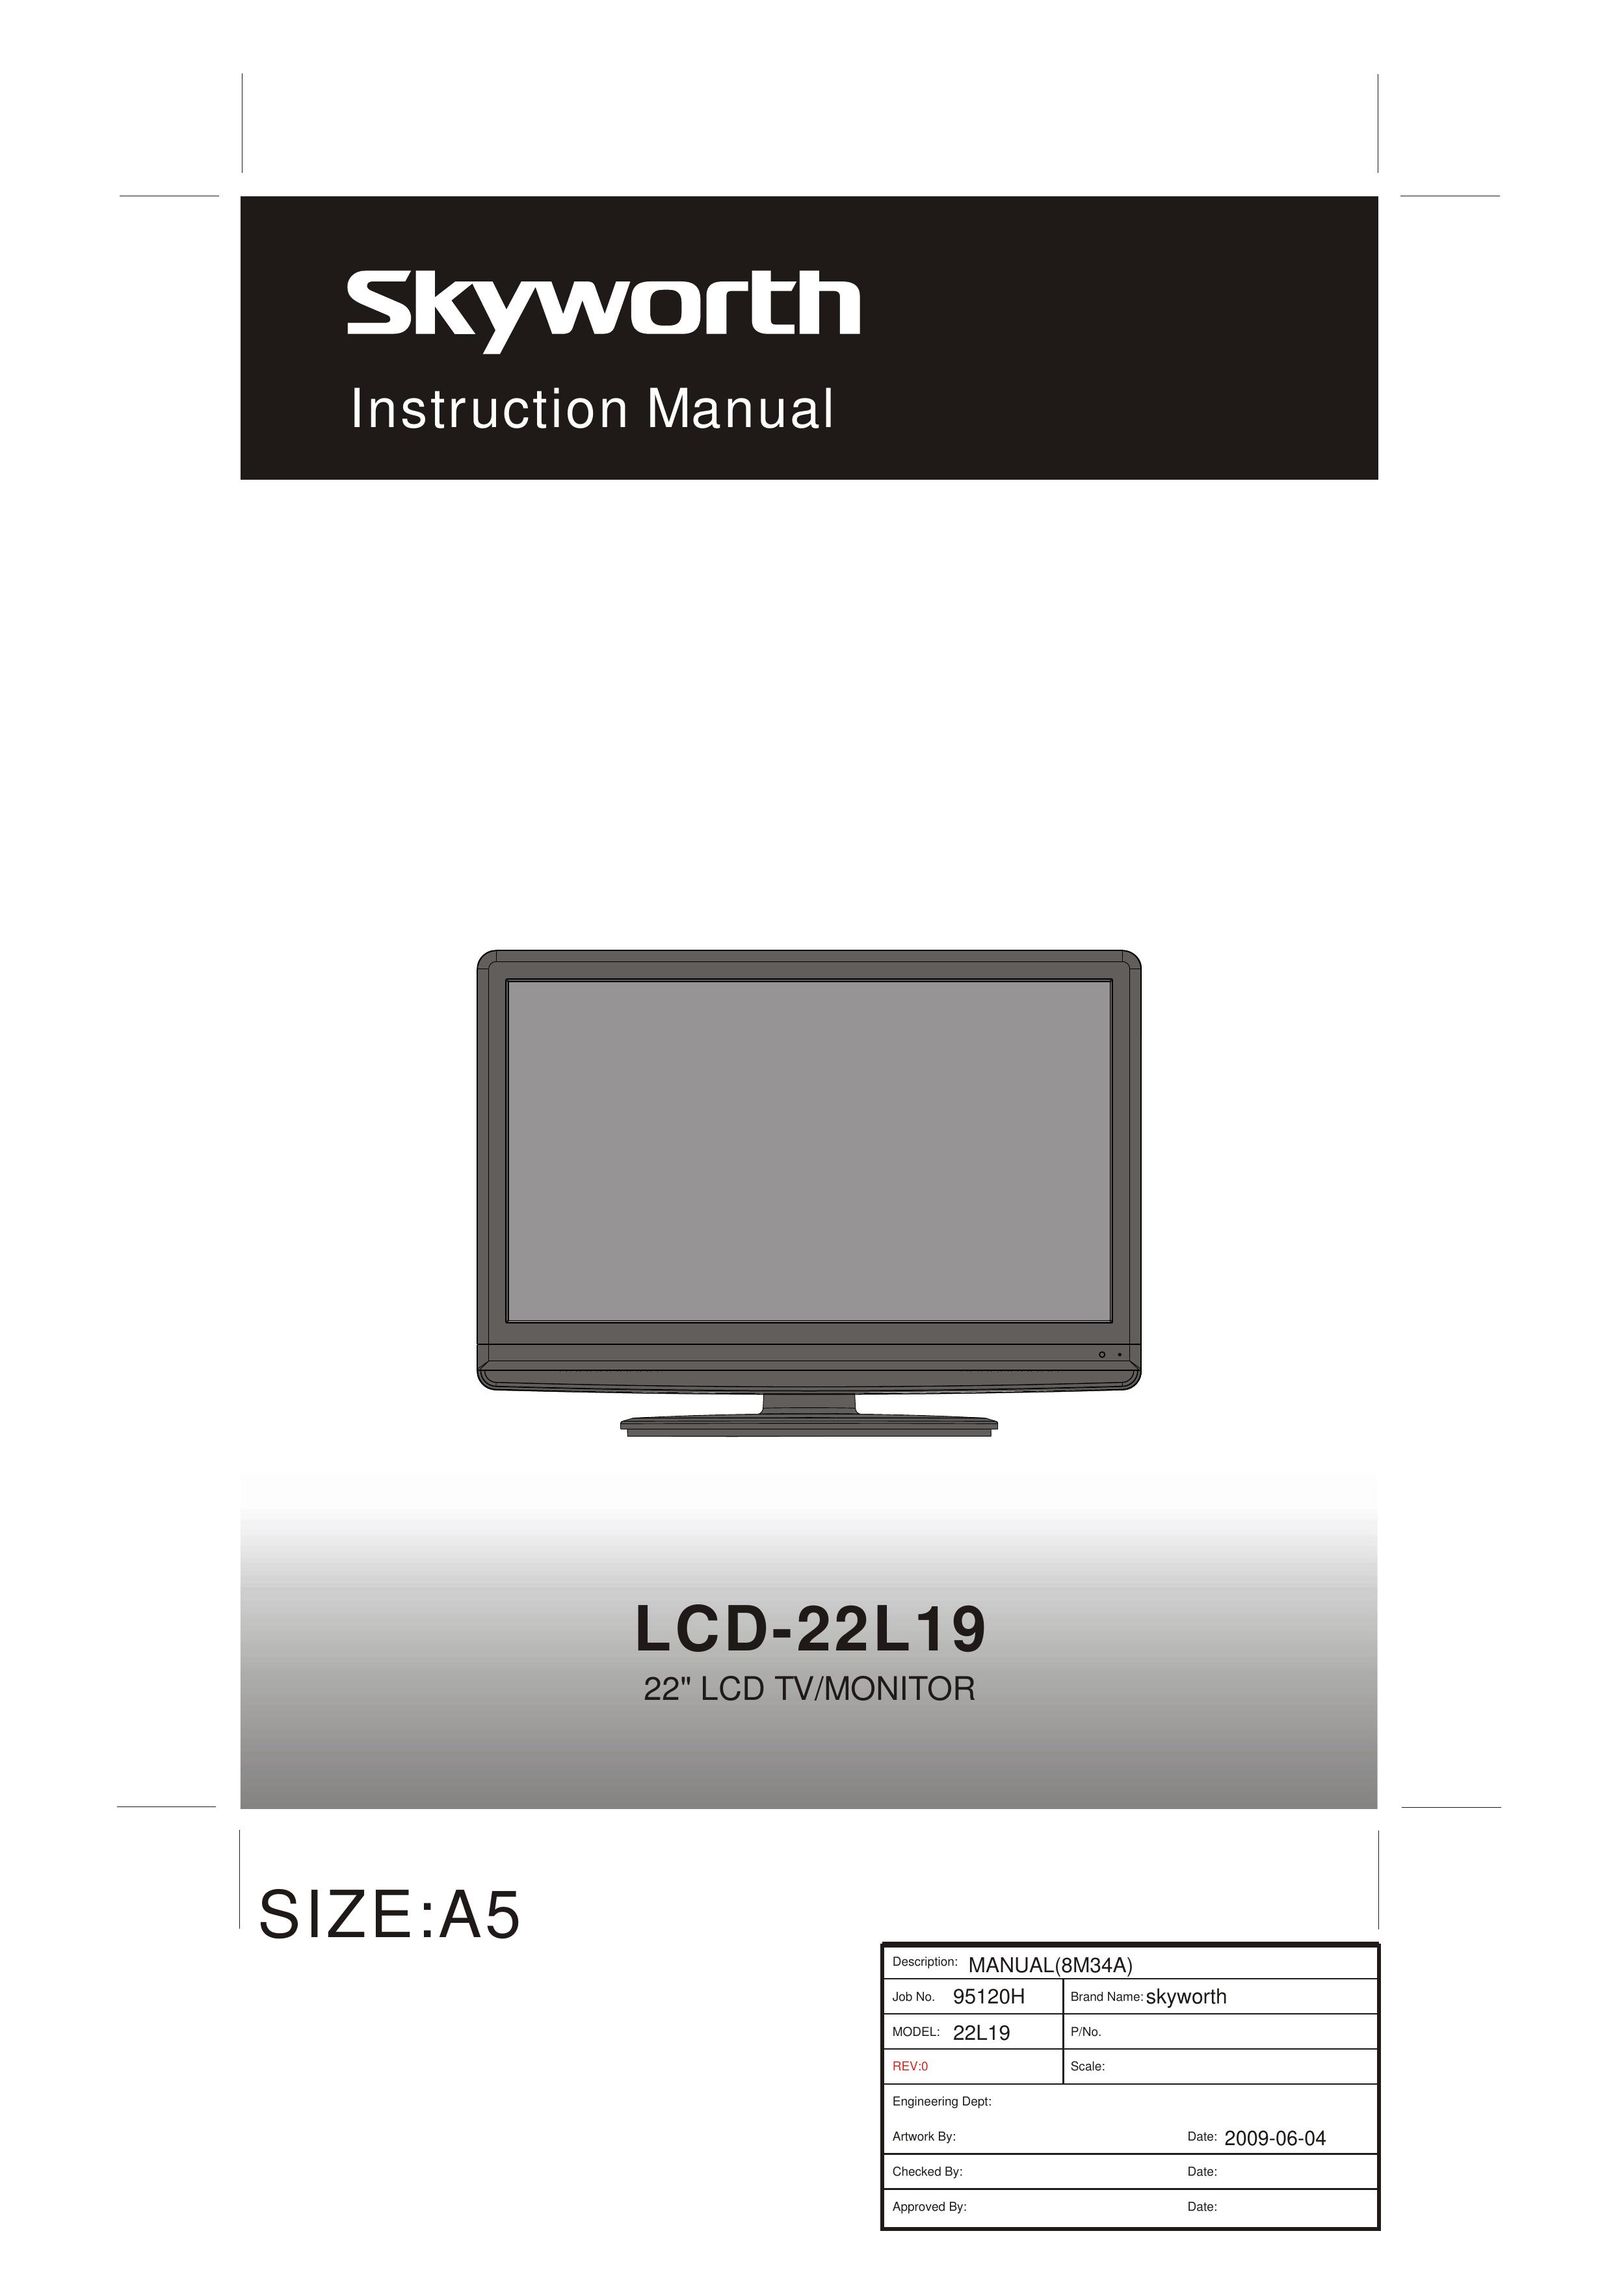 Skyworth LCD-22L19 Flat Panel Television User Manual